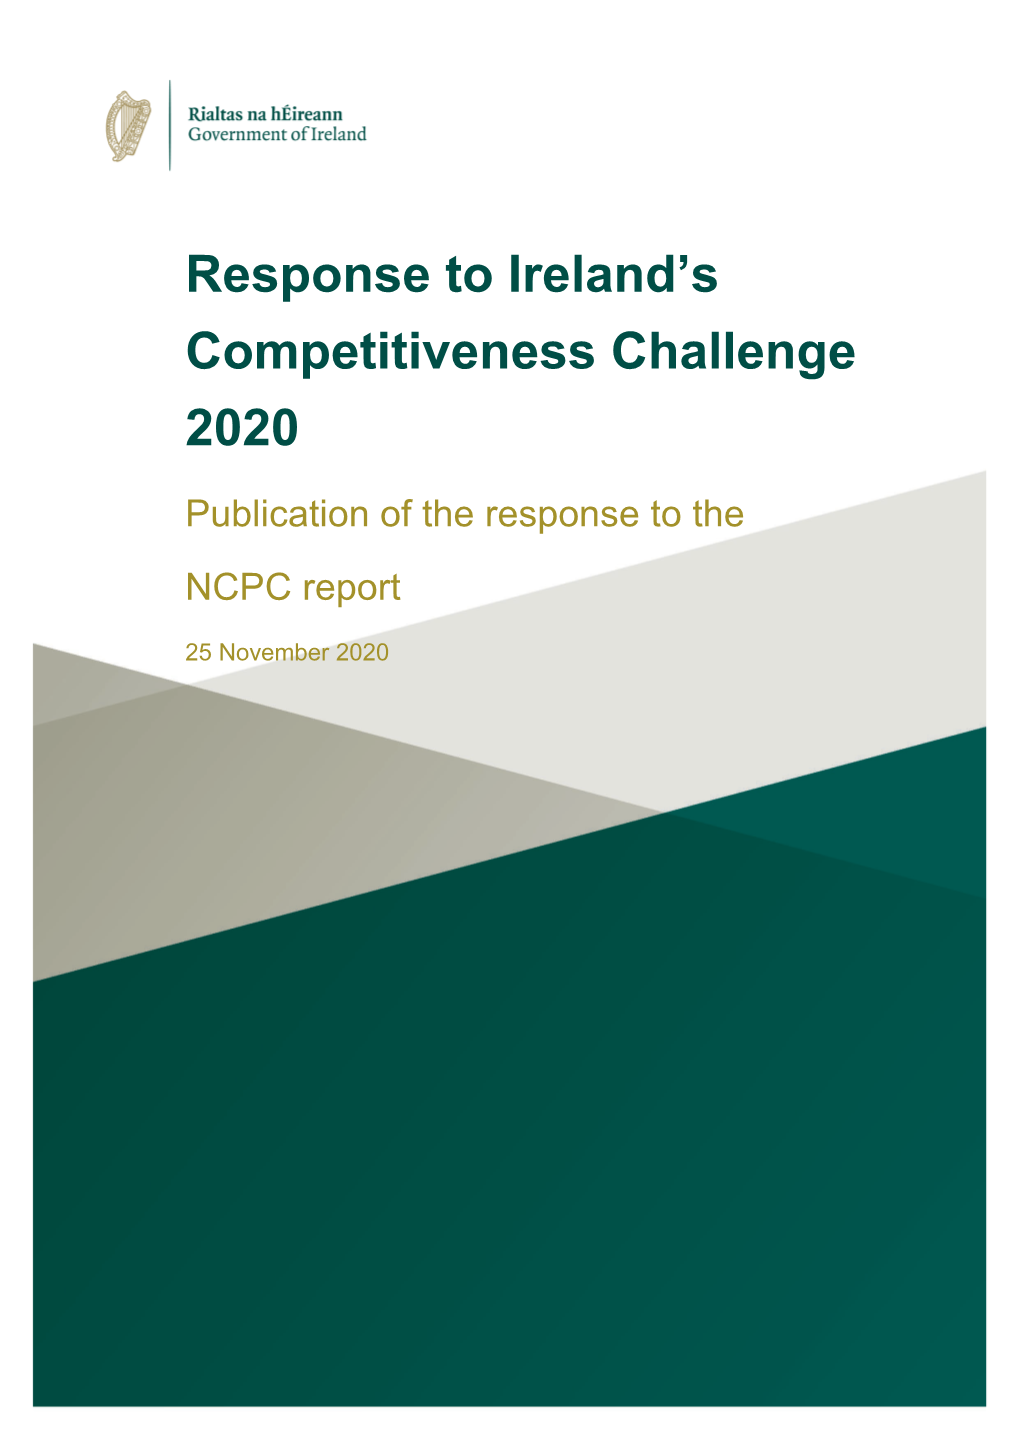 Response to Ireland's Competitiveness Challenge 2020